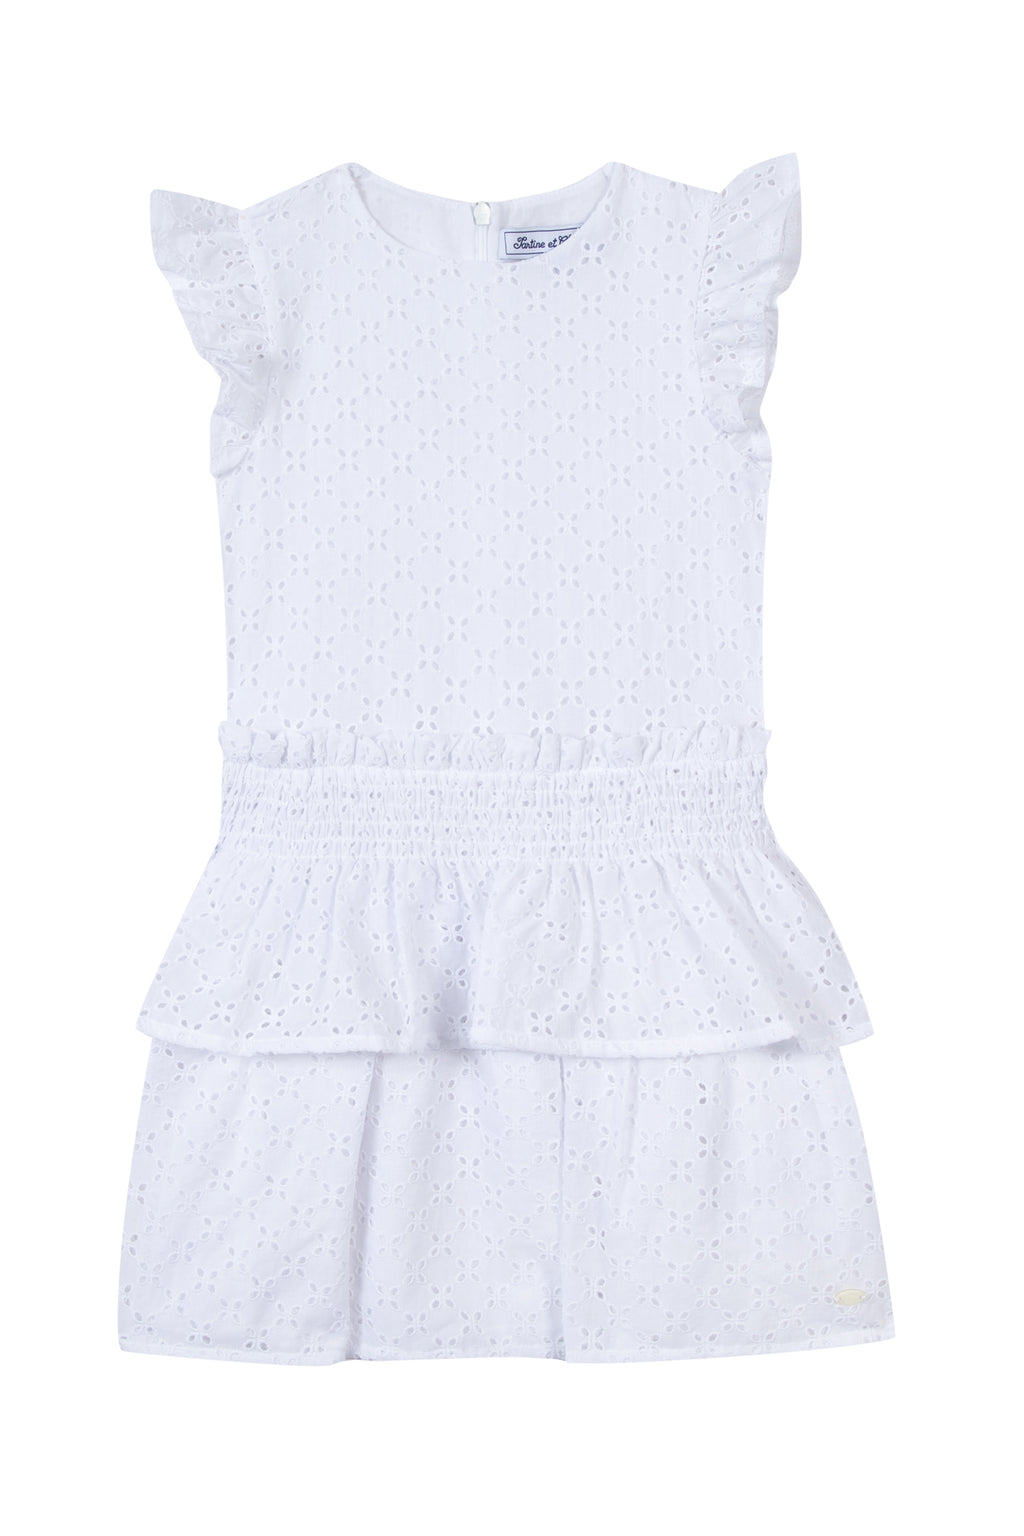 Dress - White cotton